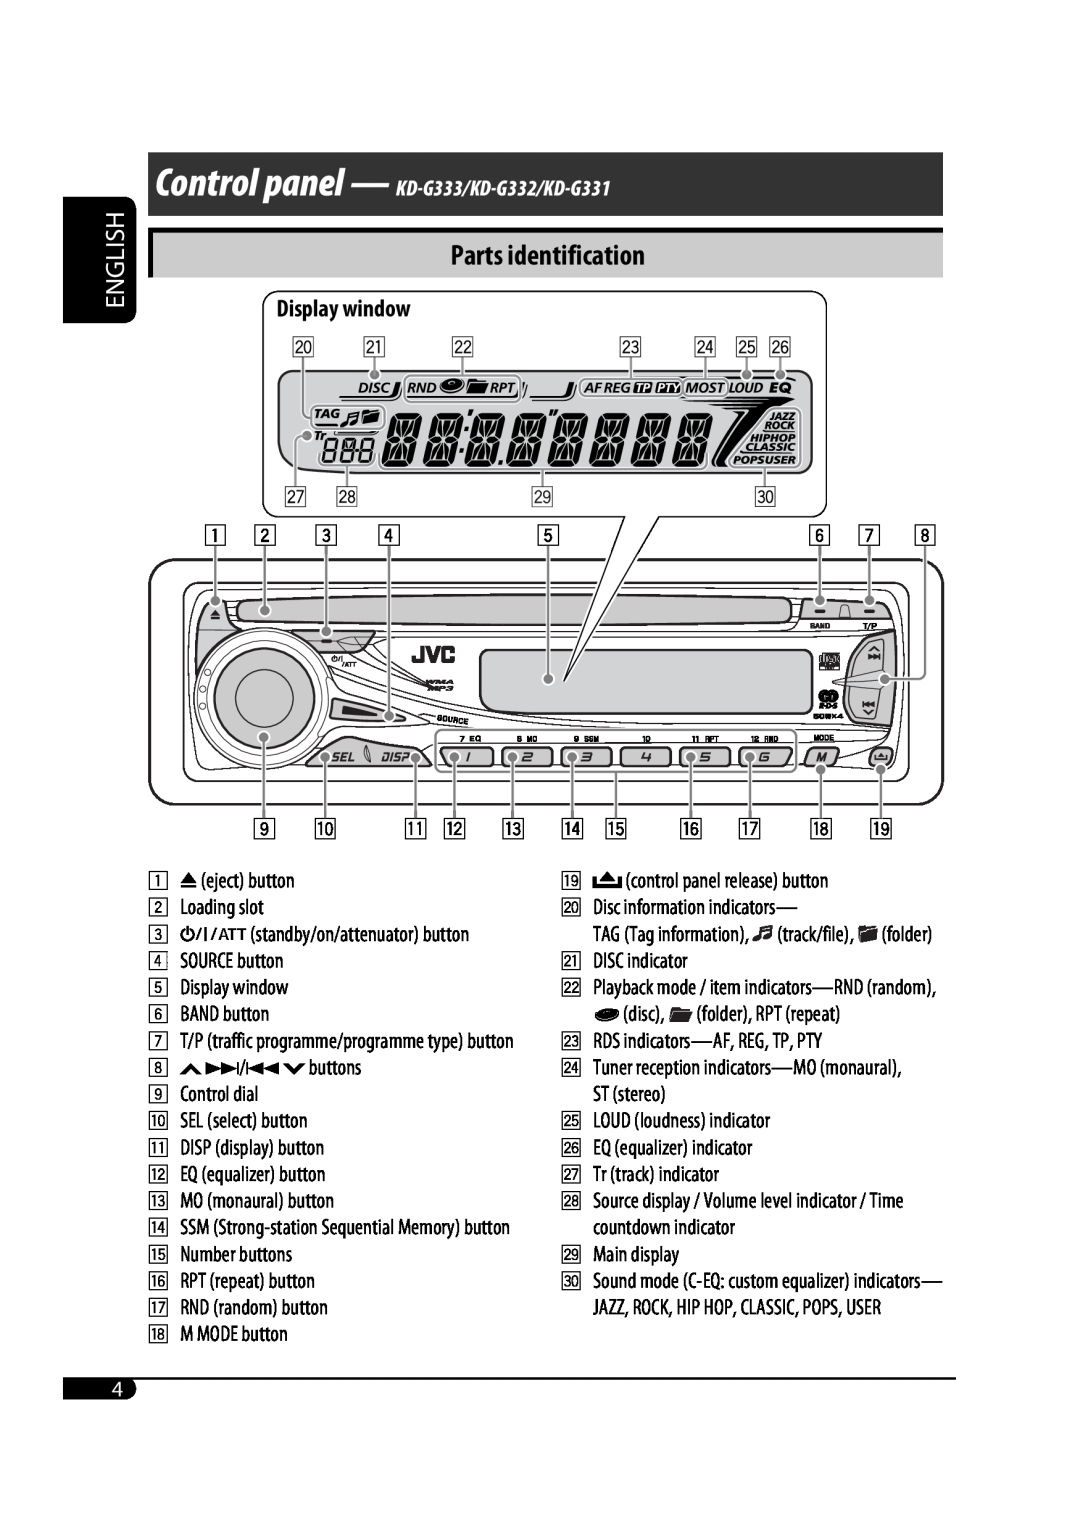 JVC manual Parts identification, Display window, English, Control panel - KD-G333/KD-G332/KD-G331 